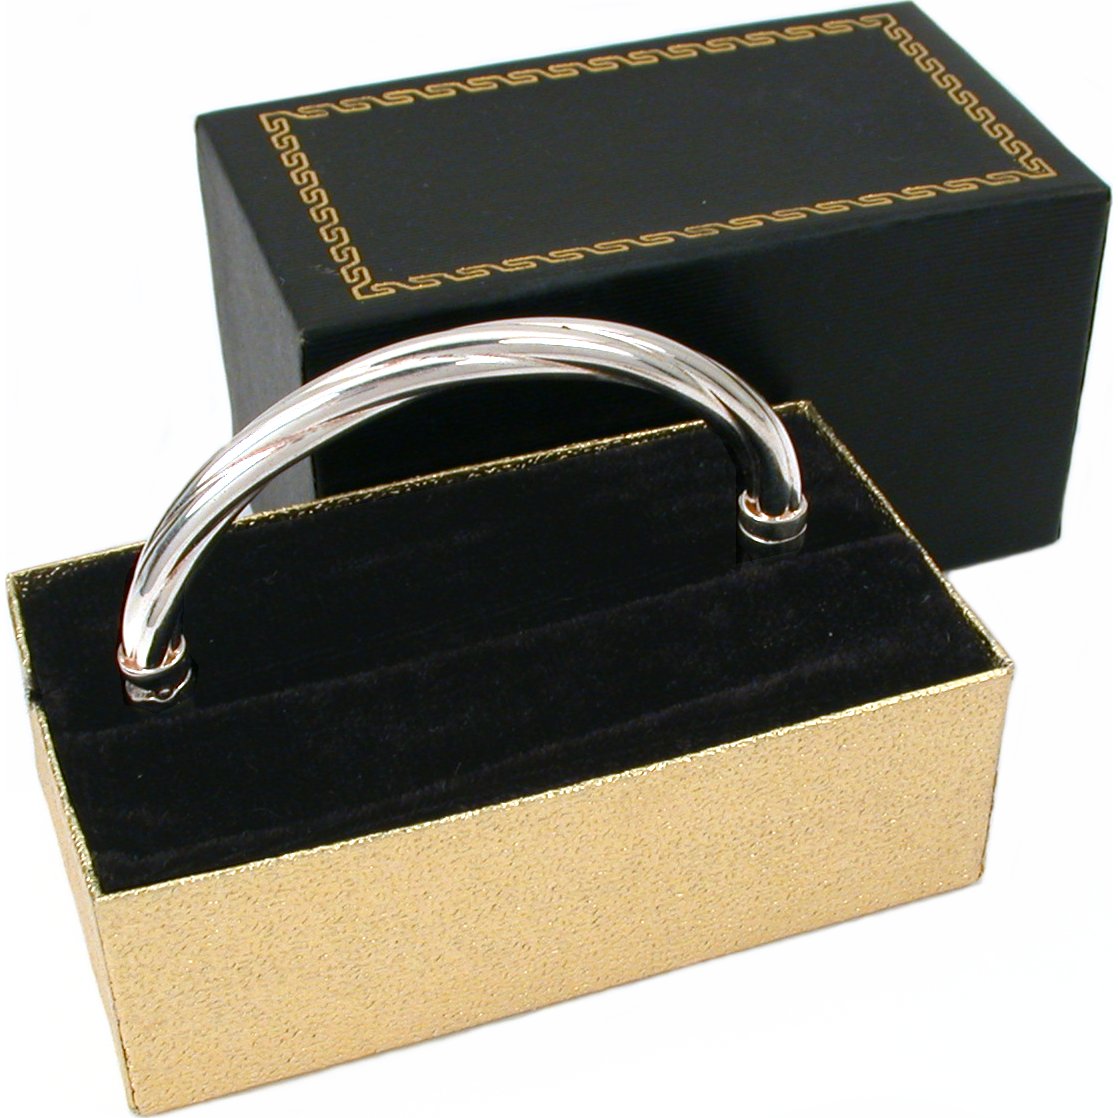 24pc Jewelry Gift Boxes Green Bracelet Boxes Watch Display Boxes Bangle  Boxes | eBay